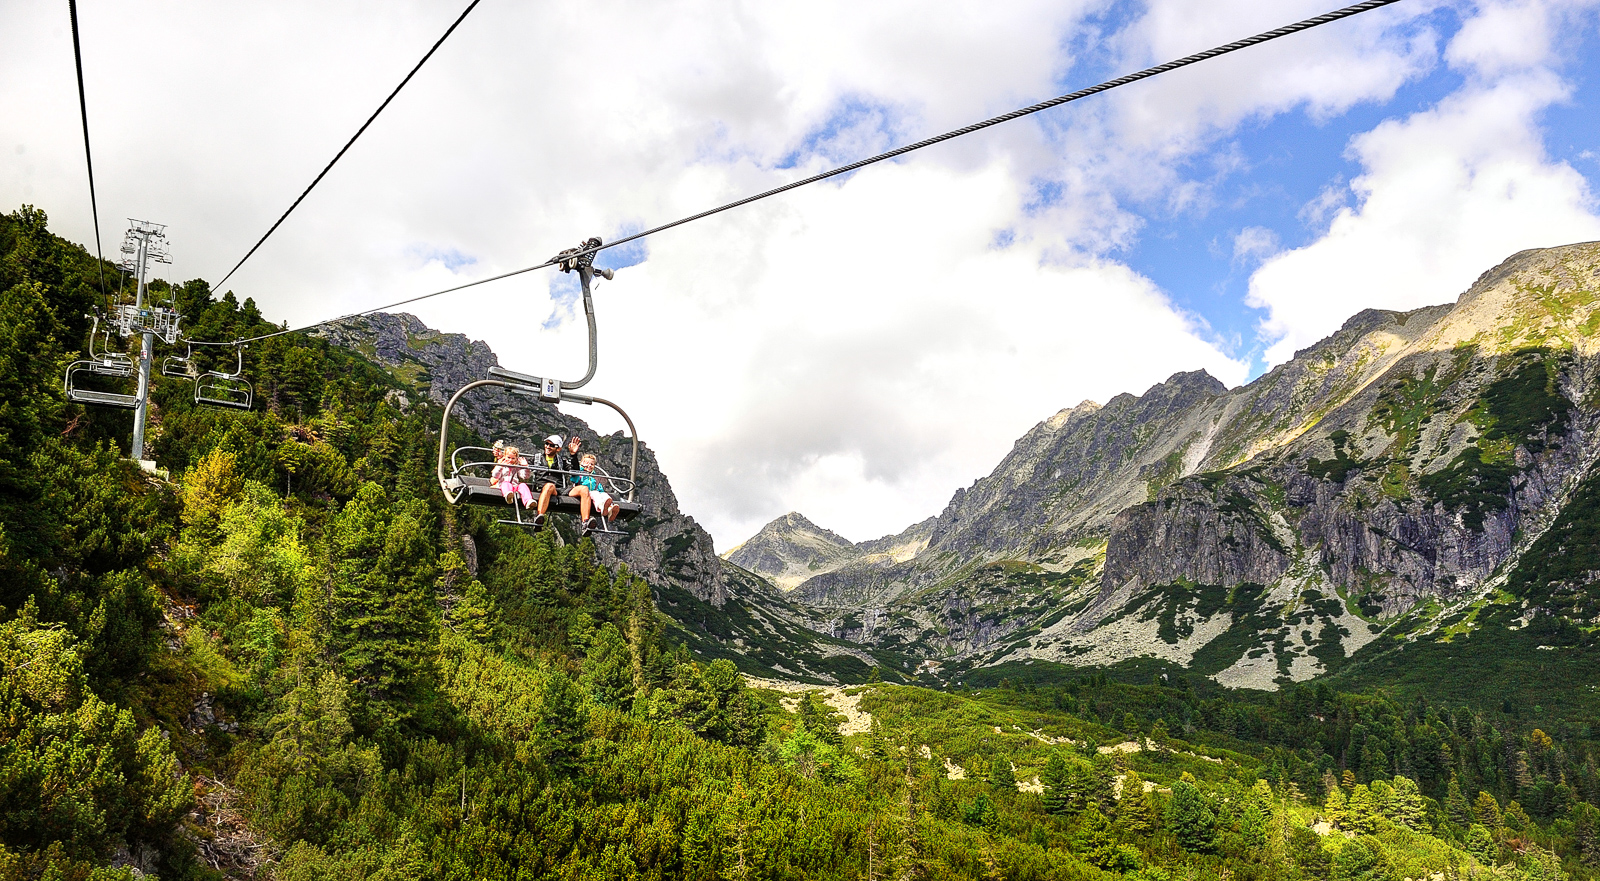 Slovakia_High Tatras_Hiking_Cable car from Strbske Pleso to Solisko 2 - Rami James